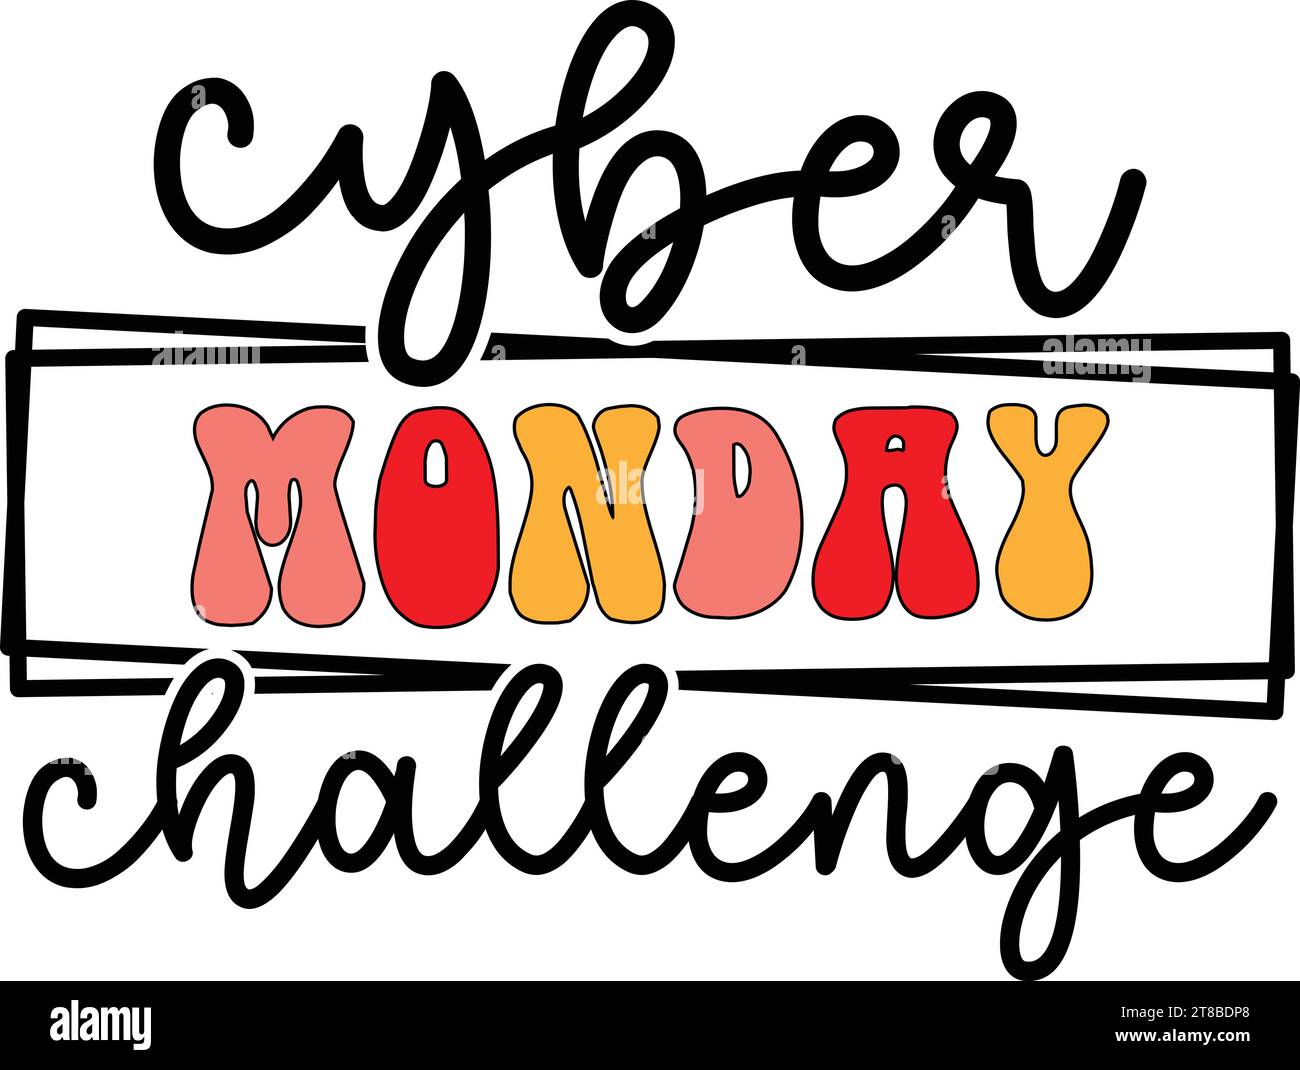 Cyber Monday Challenge Stock Vector